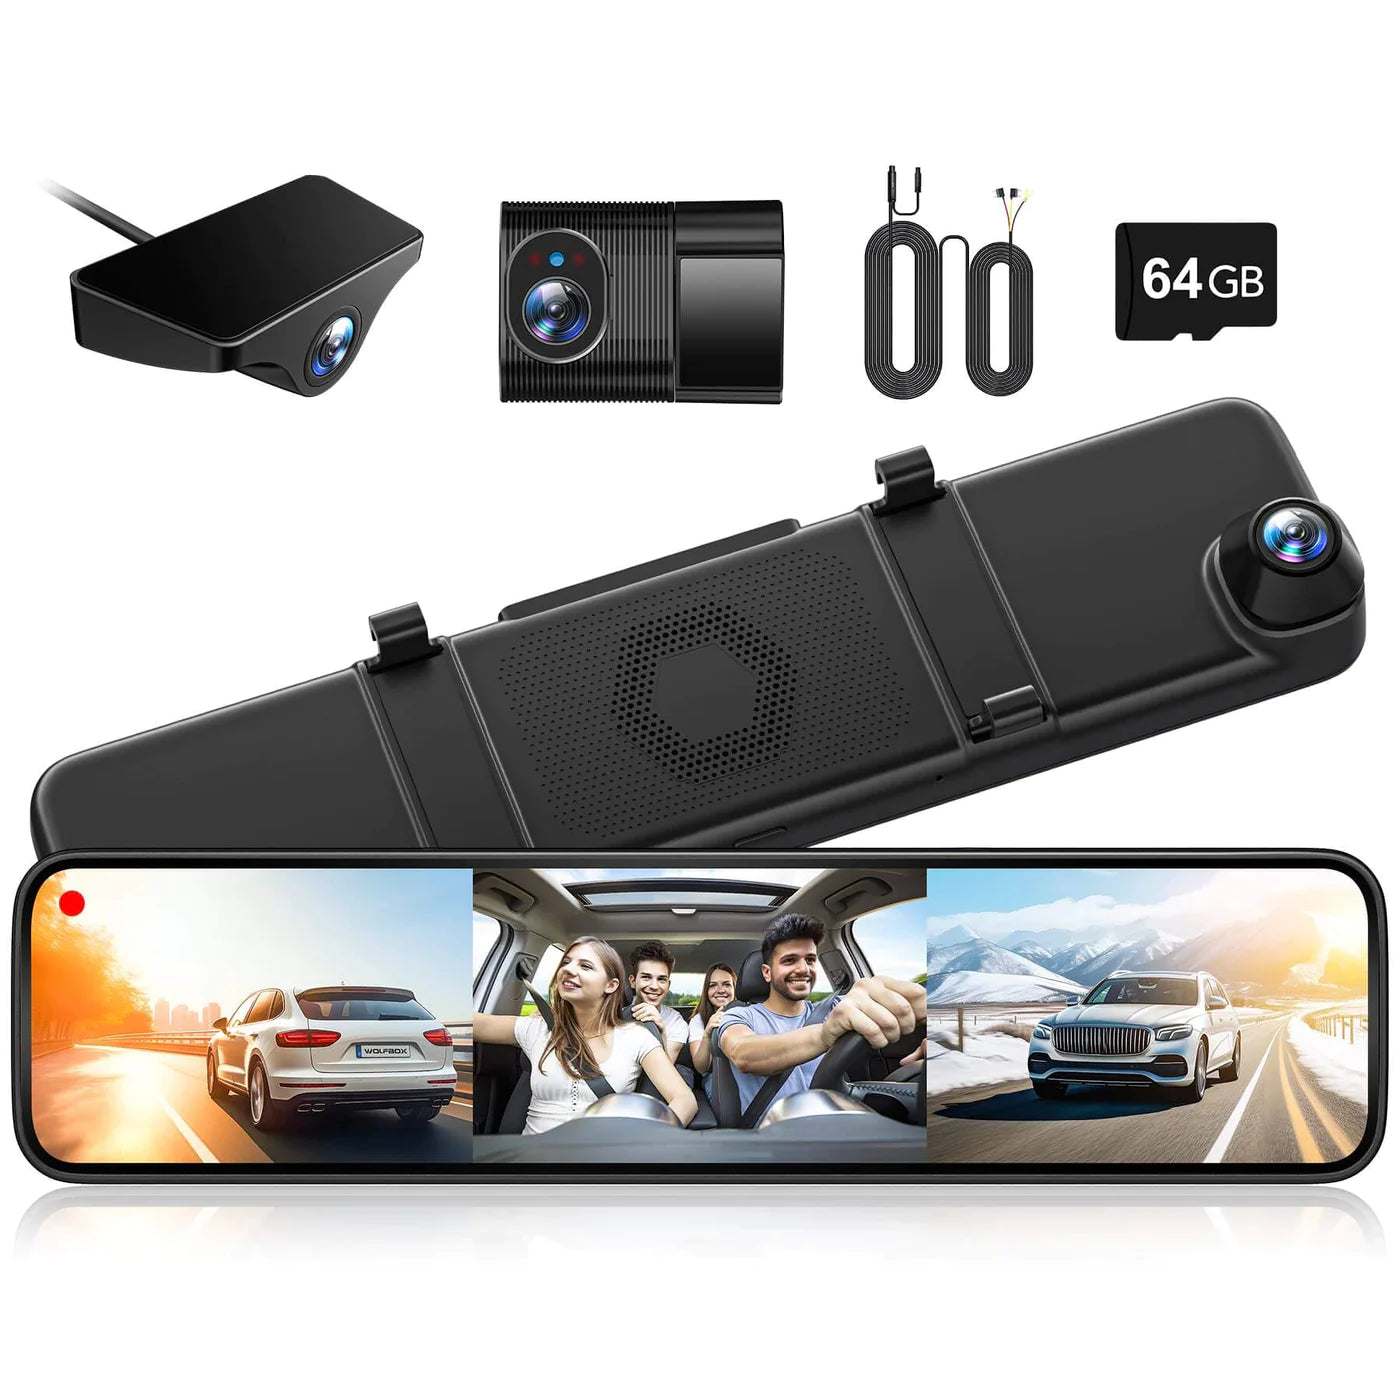 Wolfbox G890 Mirror Dash Camera, 2K+1080p+1080p @ 30fps, Touchscreen, GPS - Lockdown Security